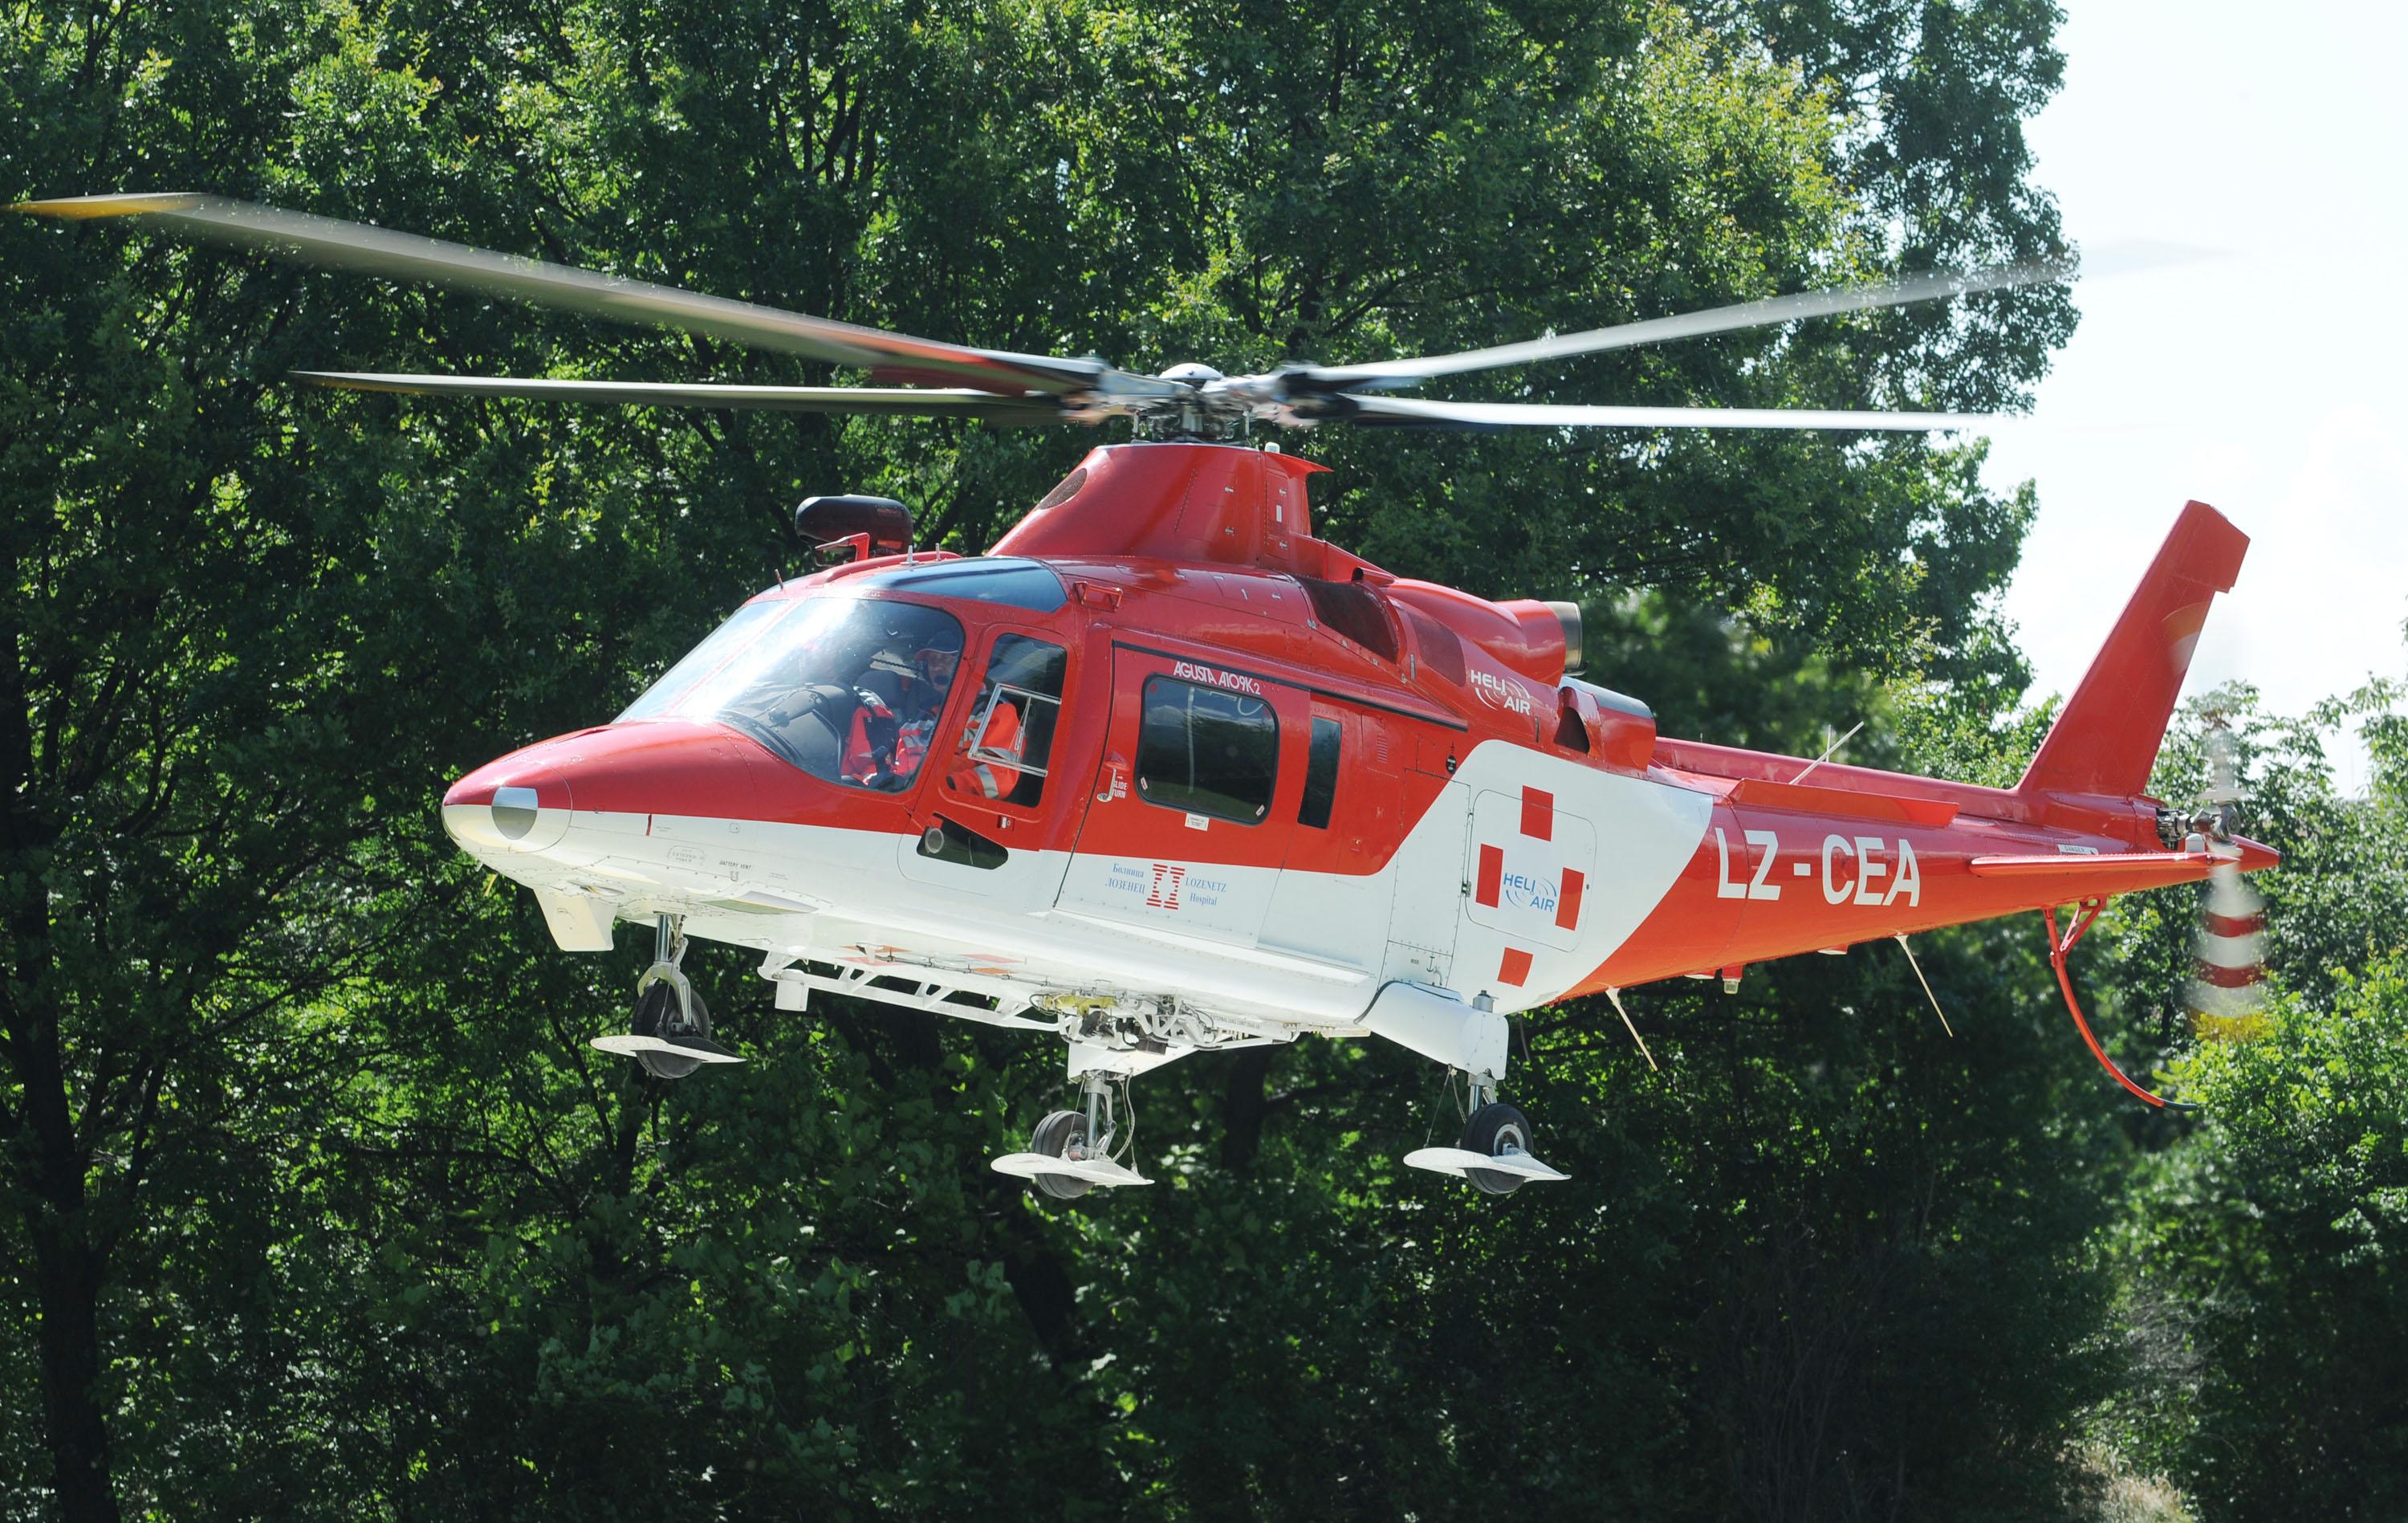 Демонстрация на хеликоптерната спешна помощ на болница ”Лозенец”